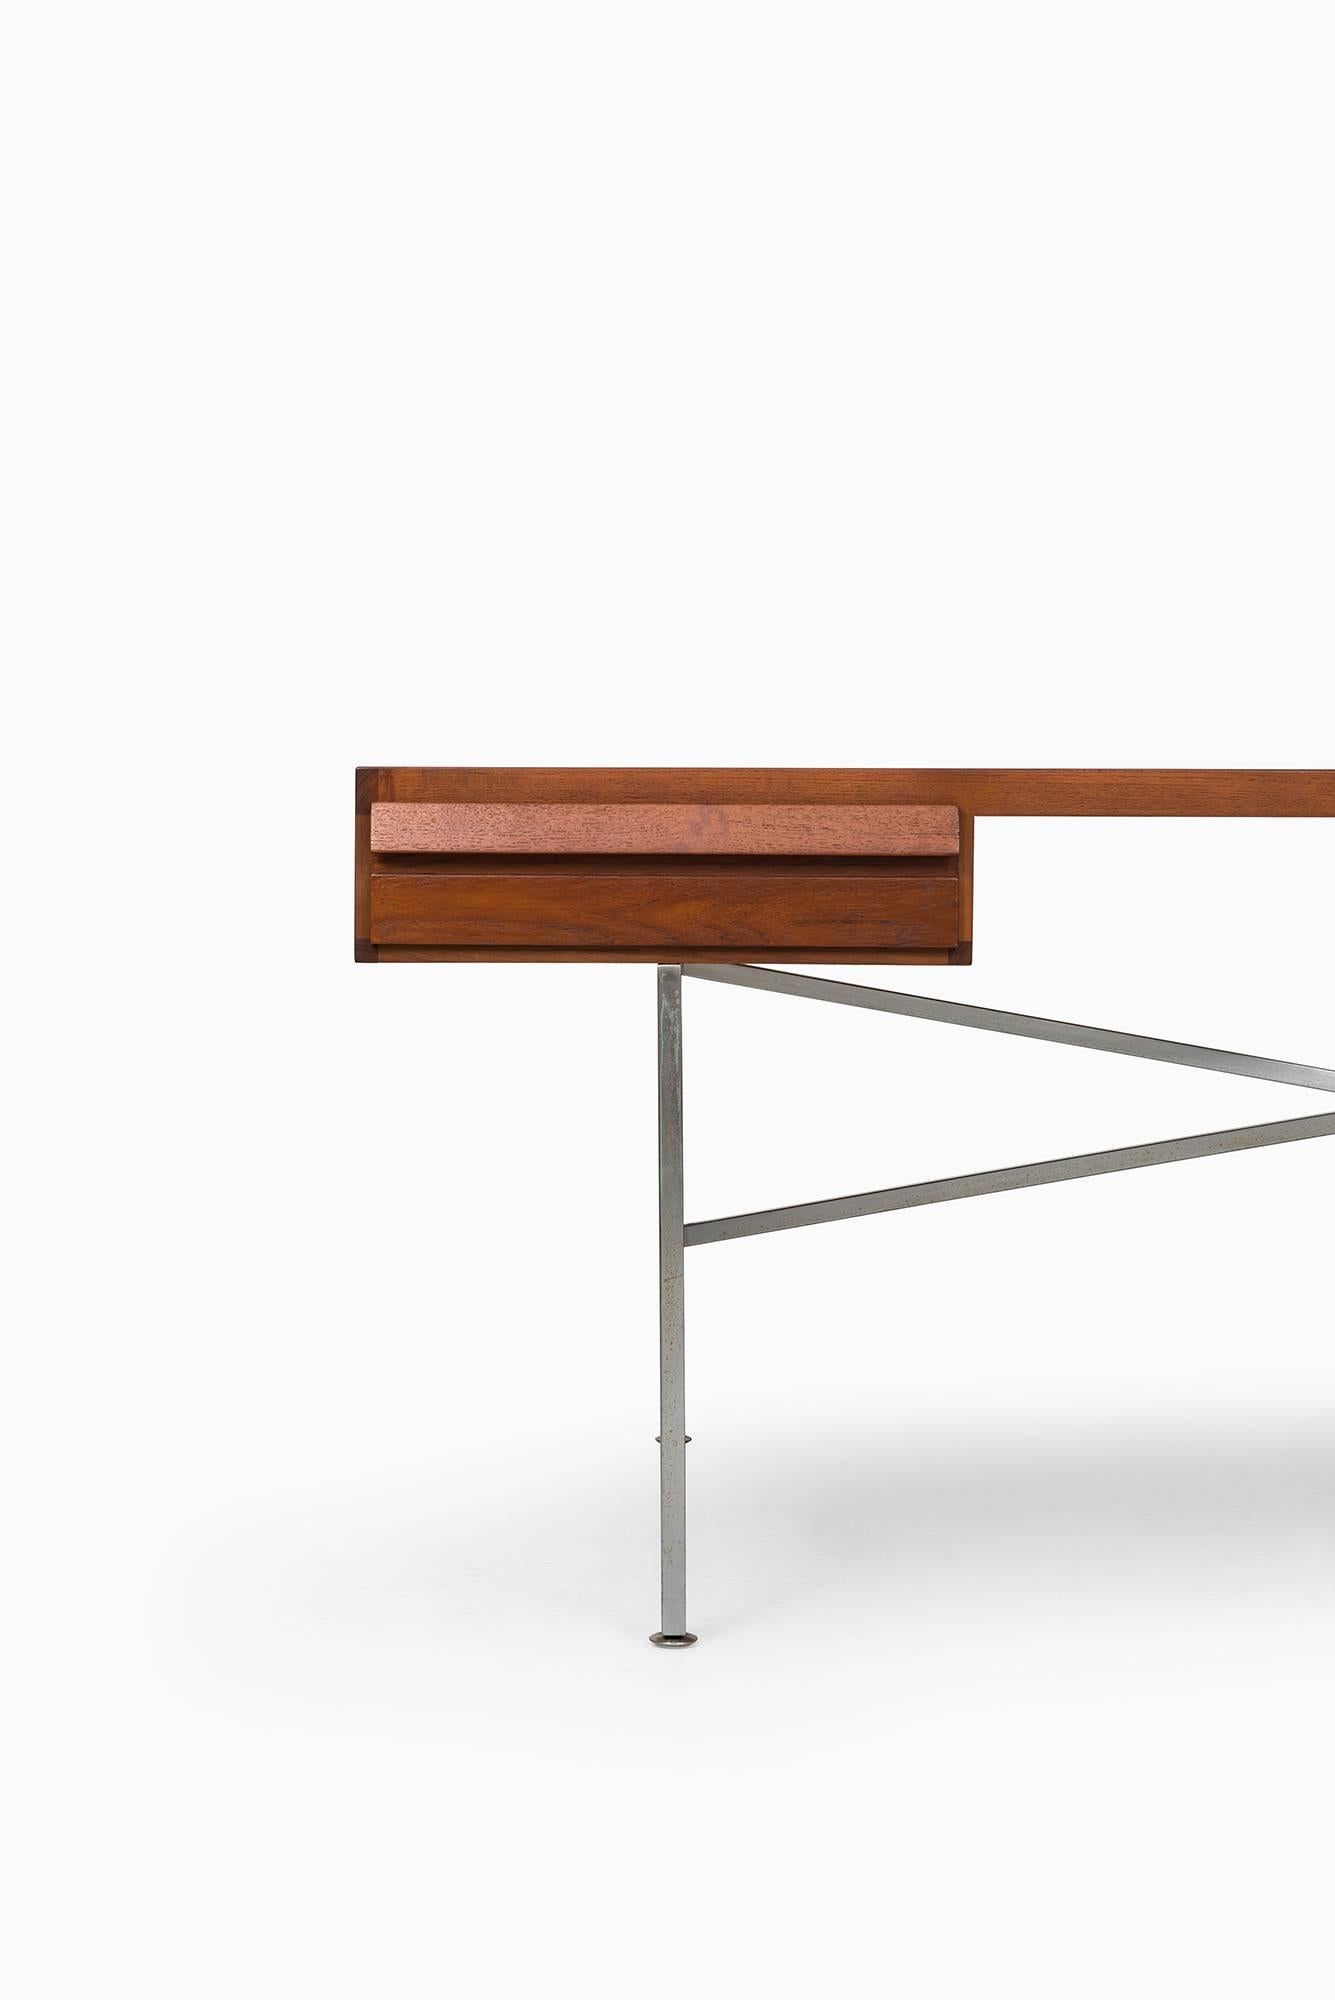 Very rare desk designed by Illum Wikkelsø. Produced by P. Schultz & Co. in Denmark.